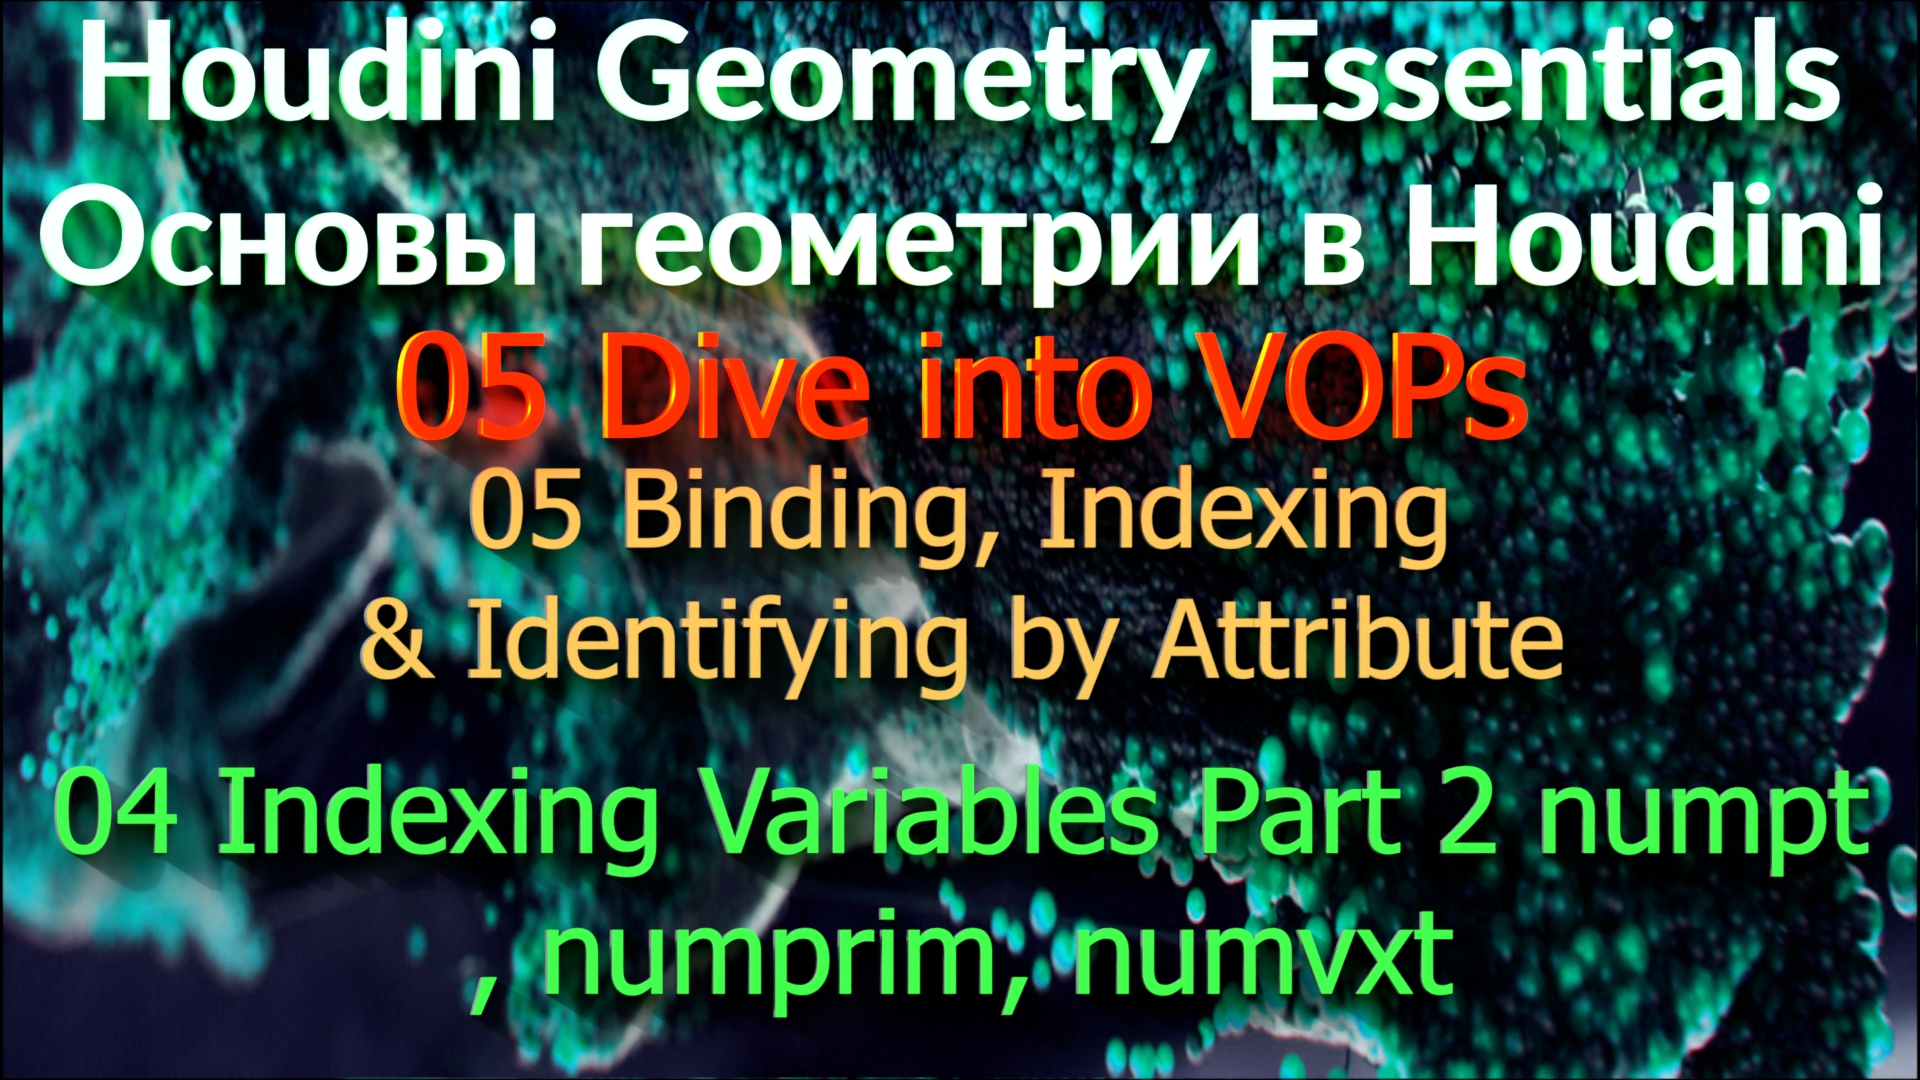 05_05_04 Indexing Variables Part 2 numpt, numprim, numvxt